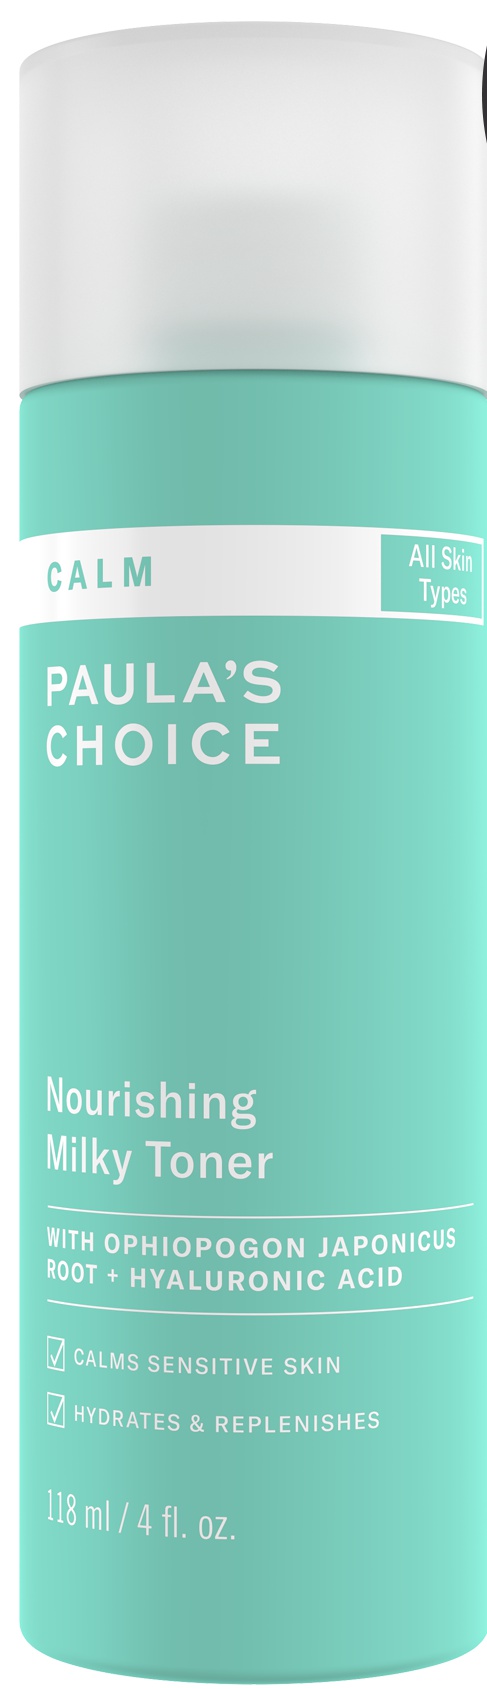 Paula's Choice Calm Nourishing Milky Toner